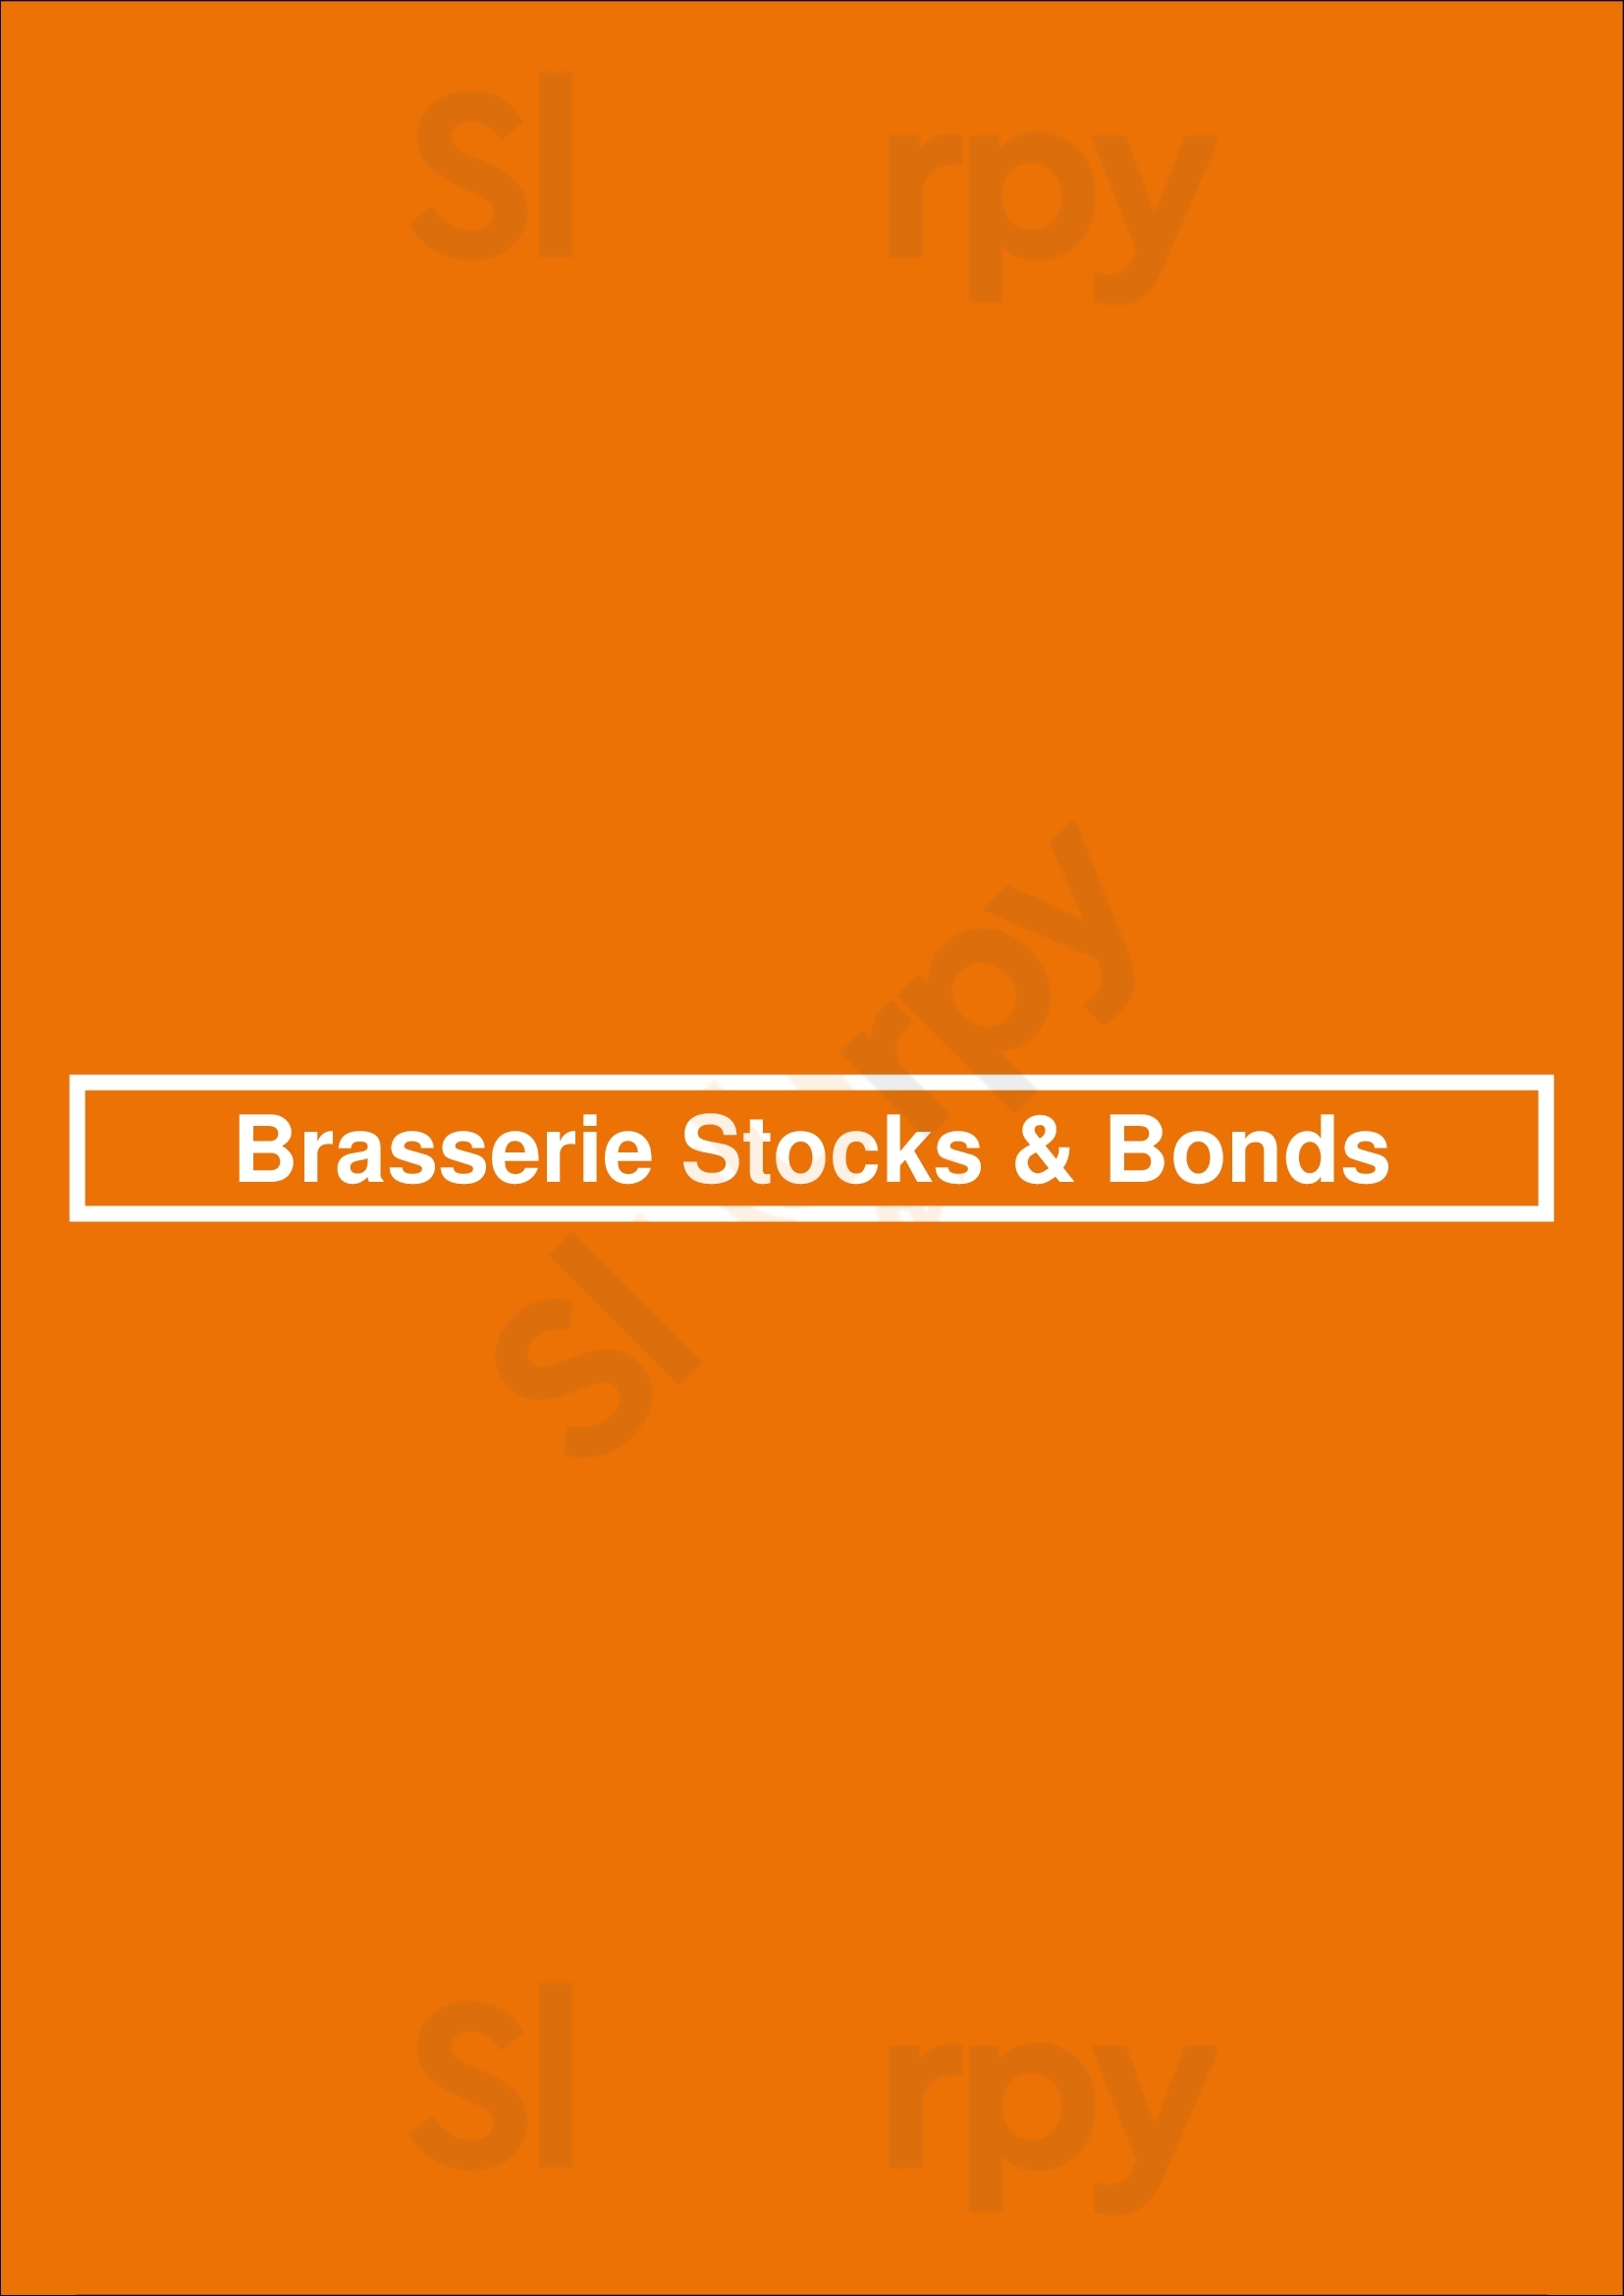 Brasserie Stocks & Bonds Den Haag Menu - 1